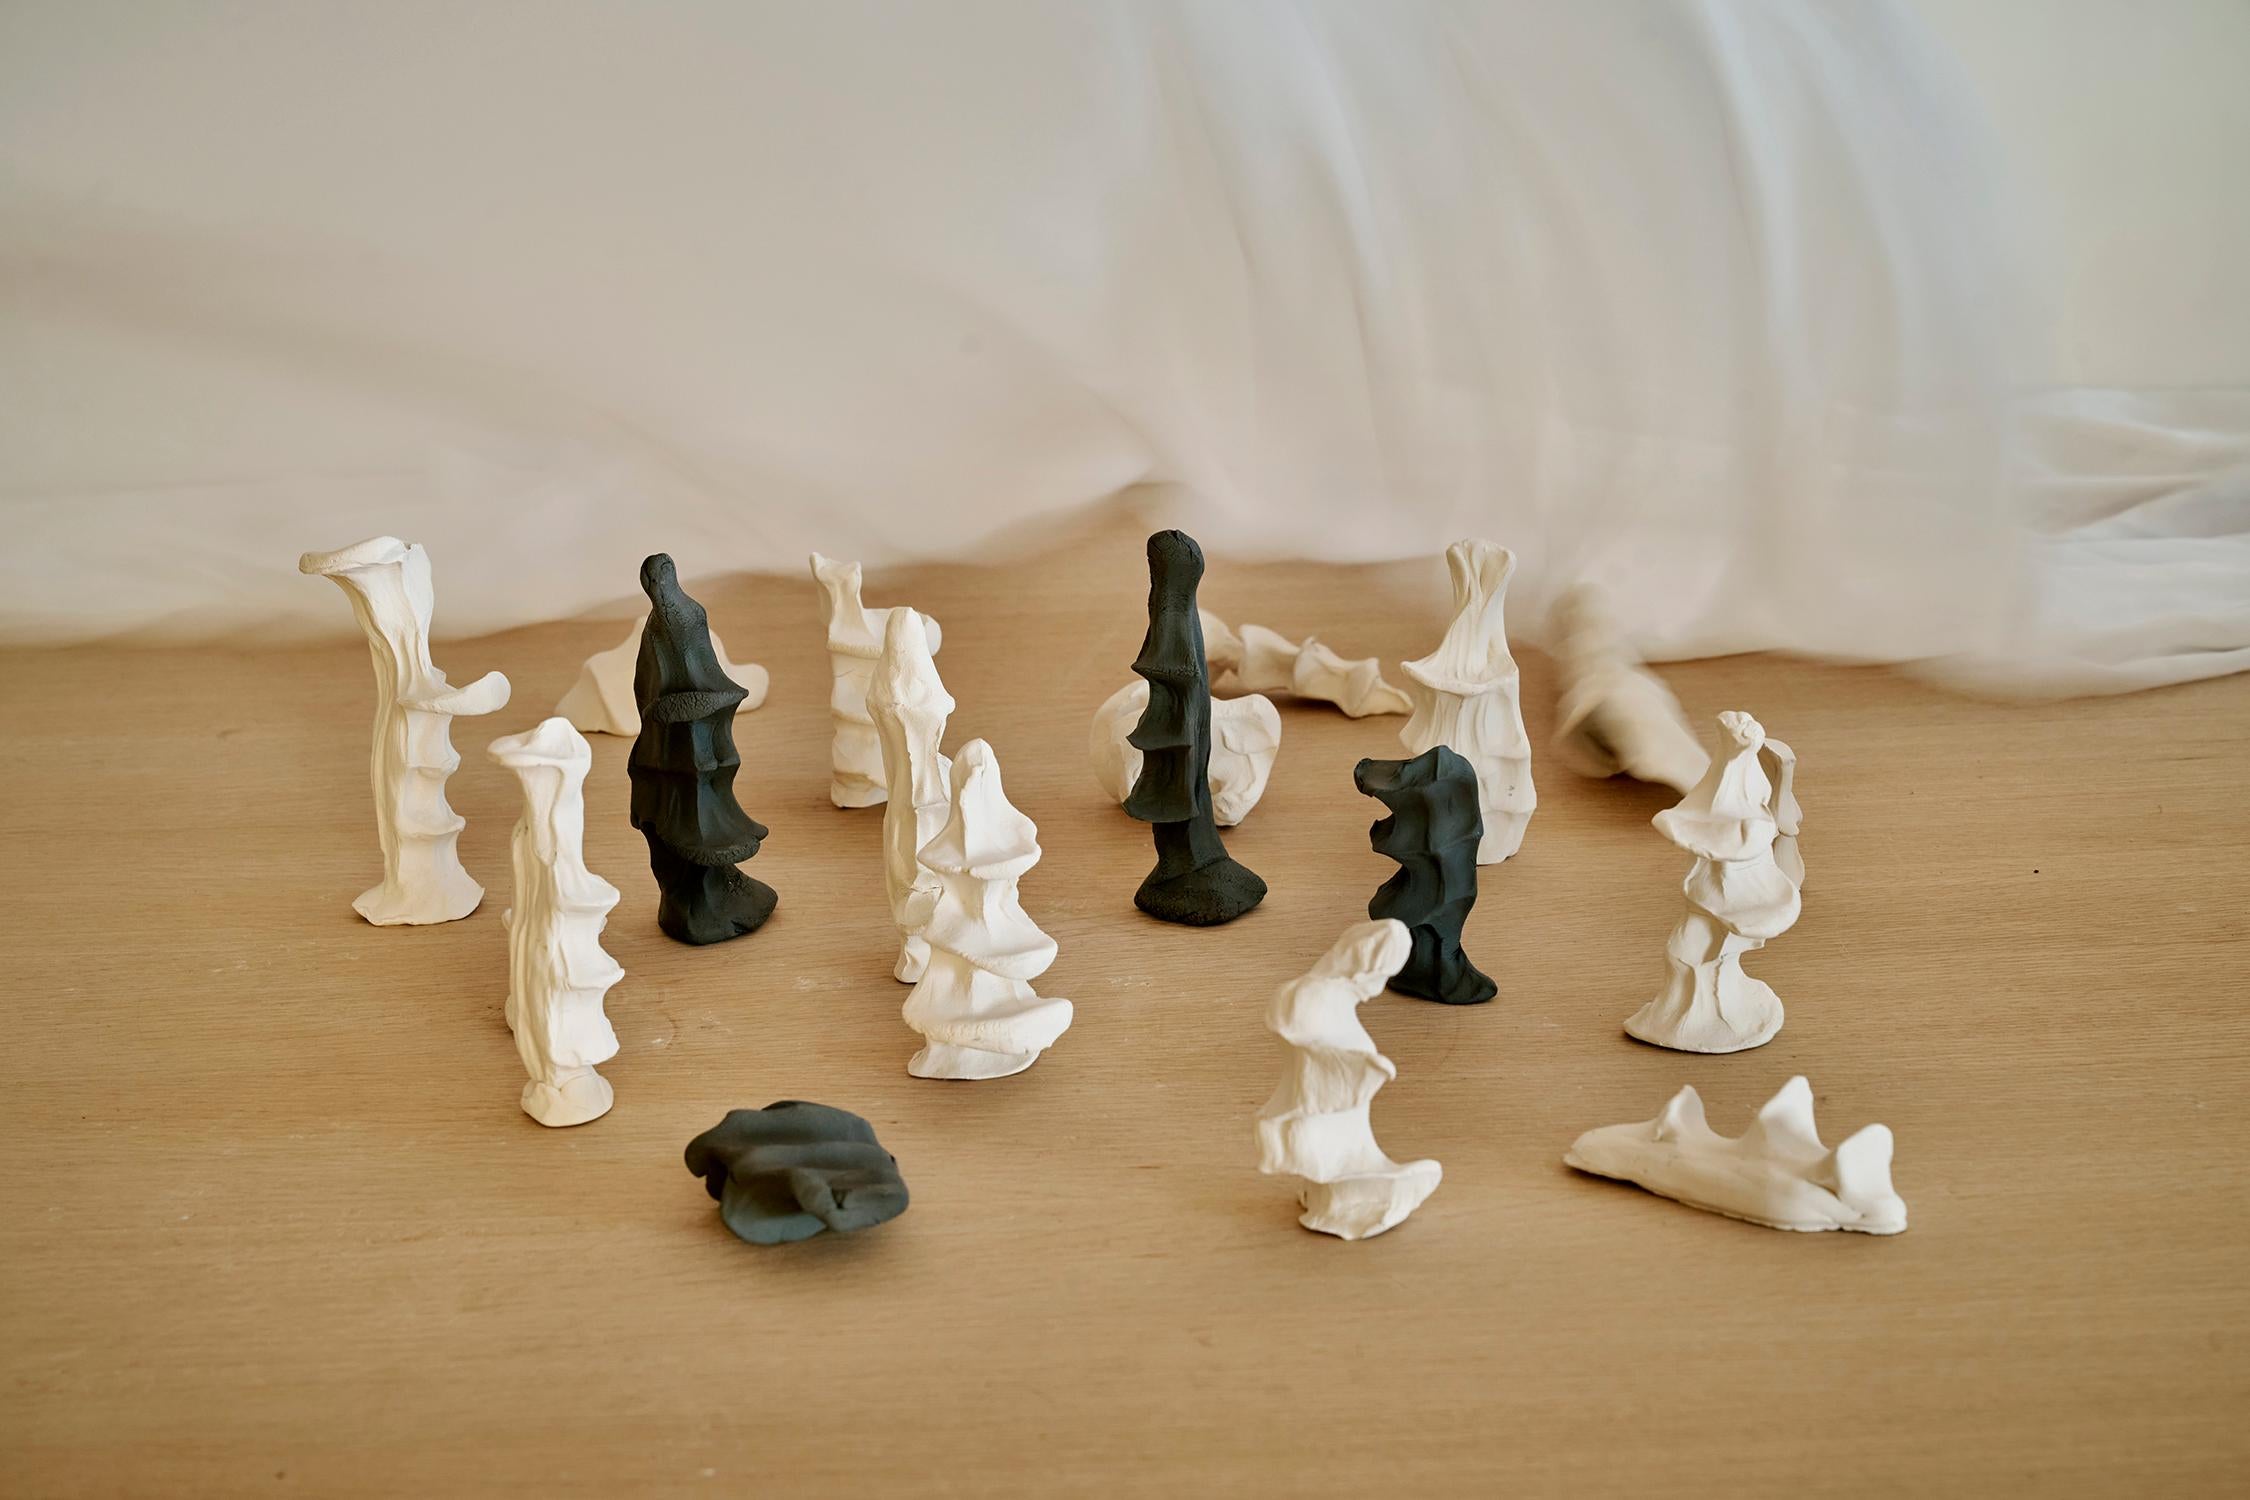 Set of Primitive Sculpture by Jean-Baptiste Van Den Heede
Unique piece
Dimensions: W 1 x D 1 x H 7-15 cm
Materials: Clay.

Study of 